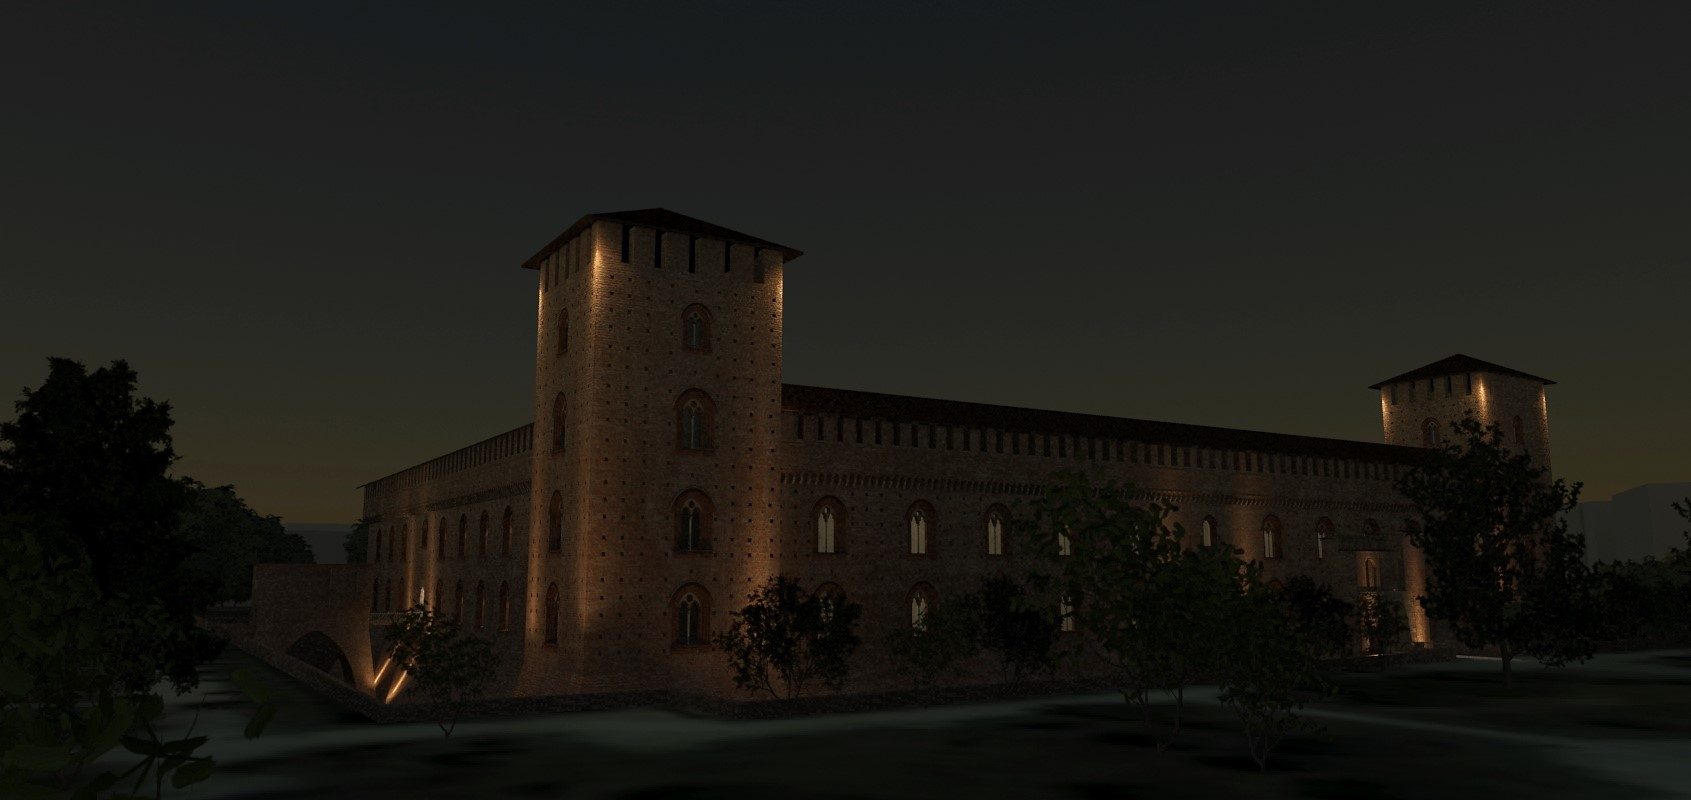 Permalink to: Pavia – Castello – Simulazione notturna